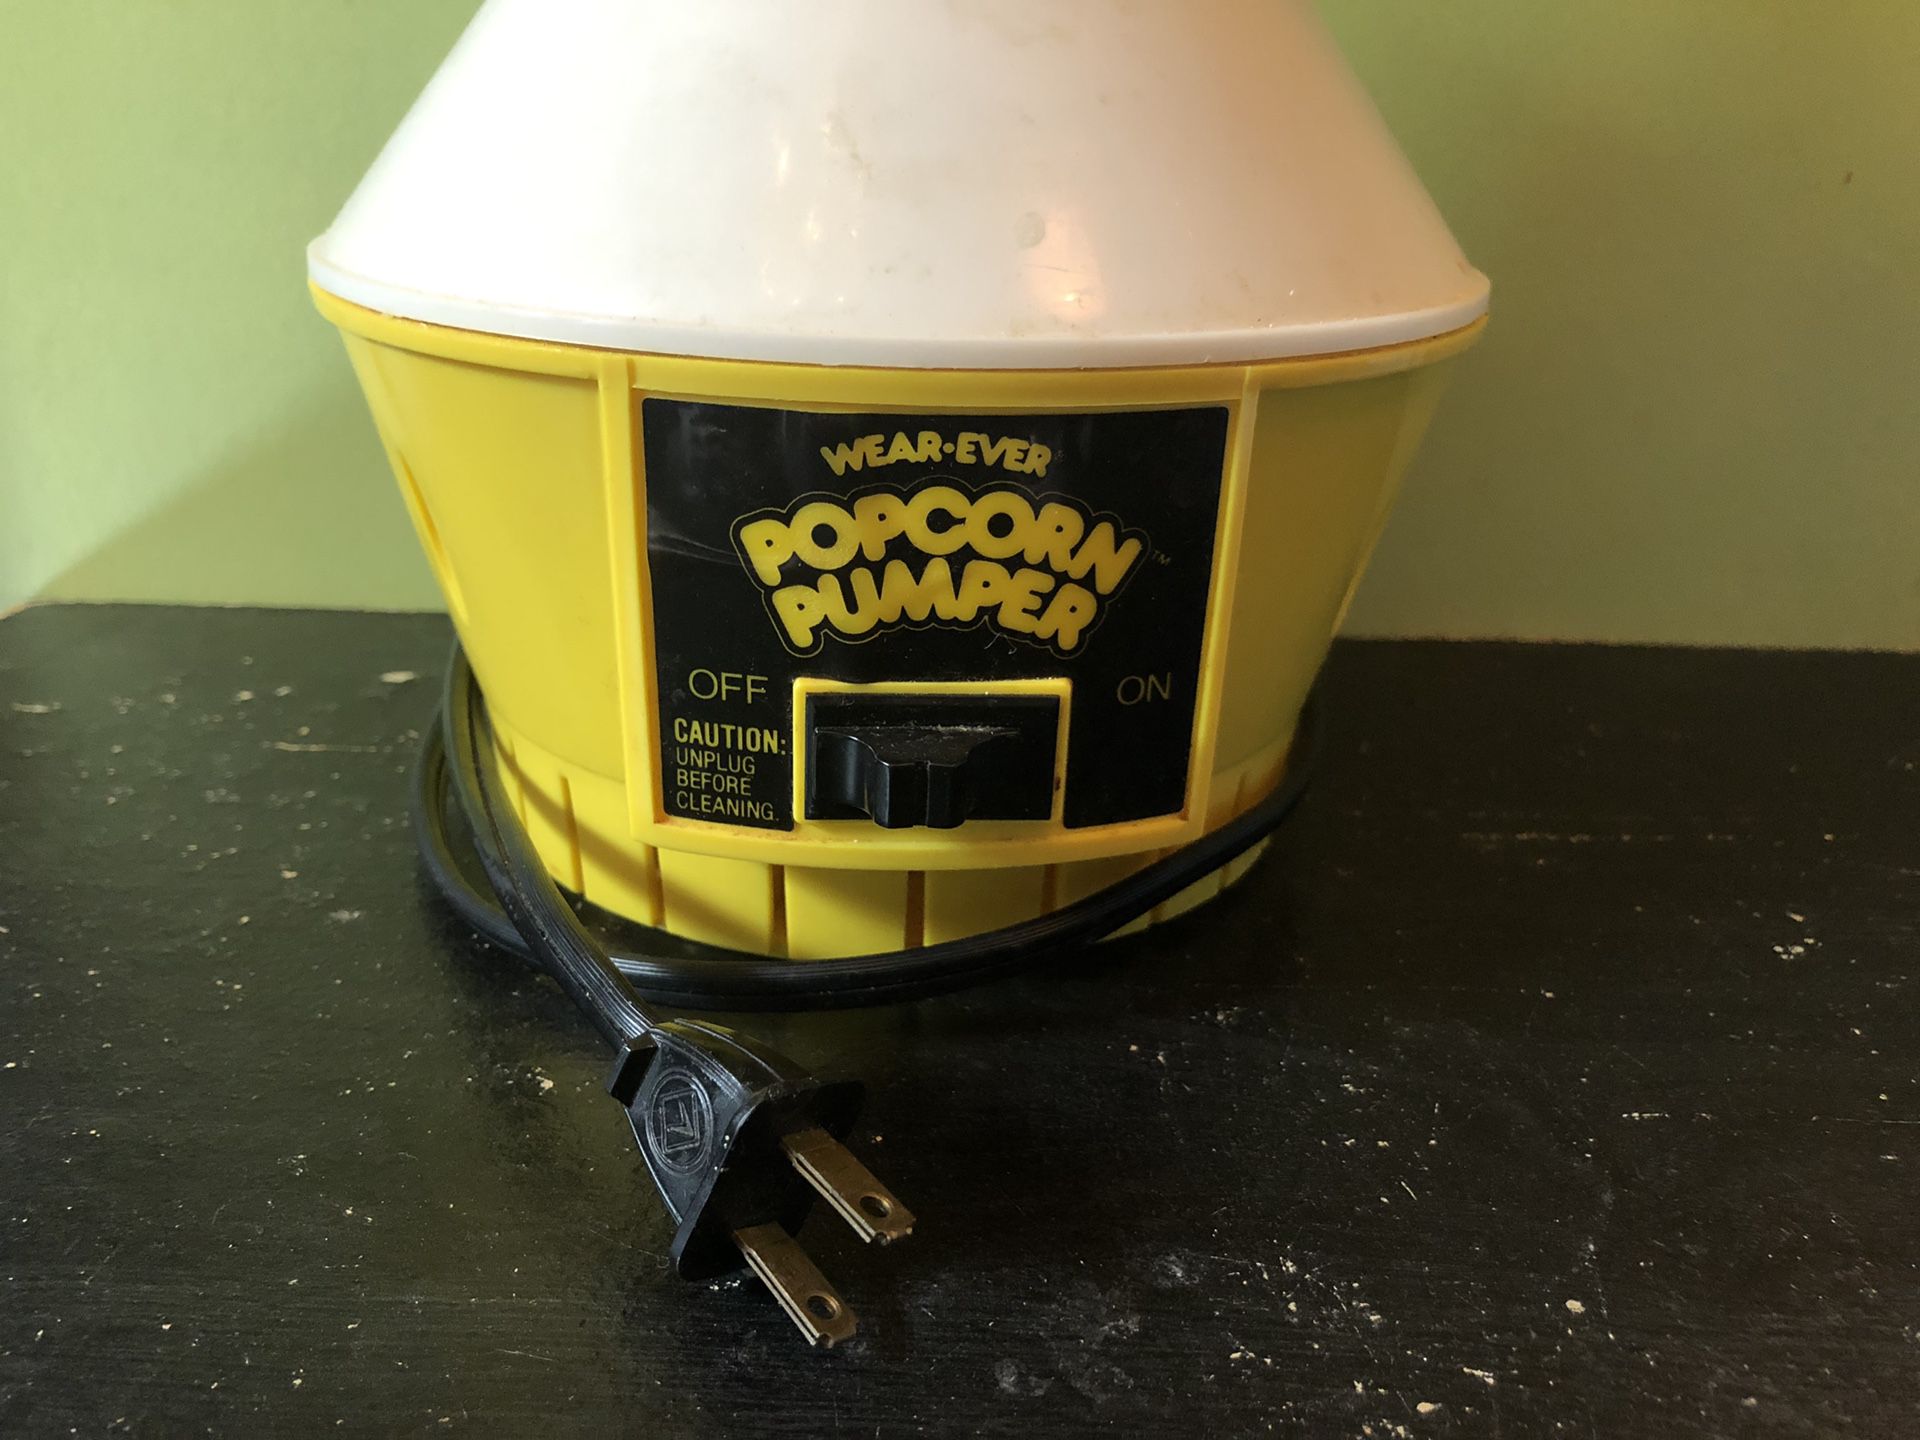 50s style popcorn maker mini for Sale in Hesperia, CA - OfferUp